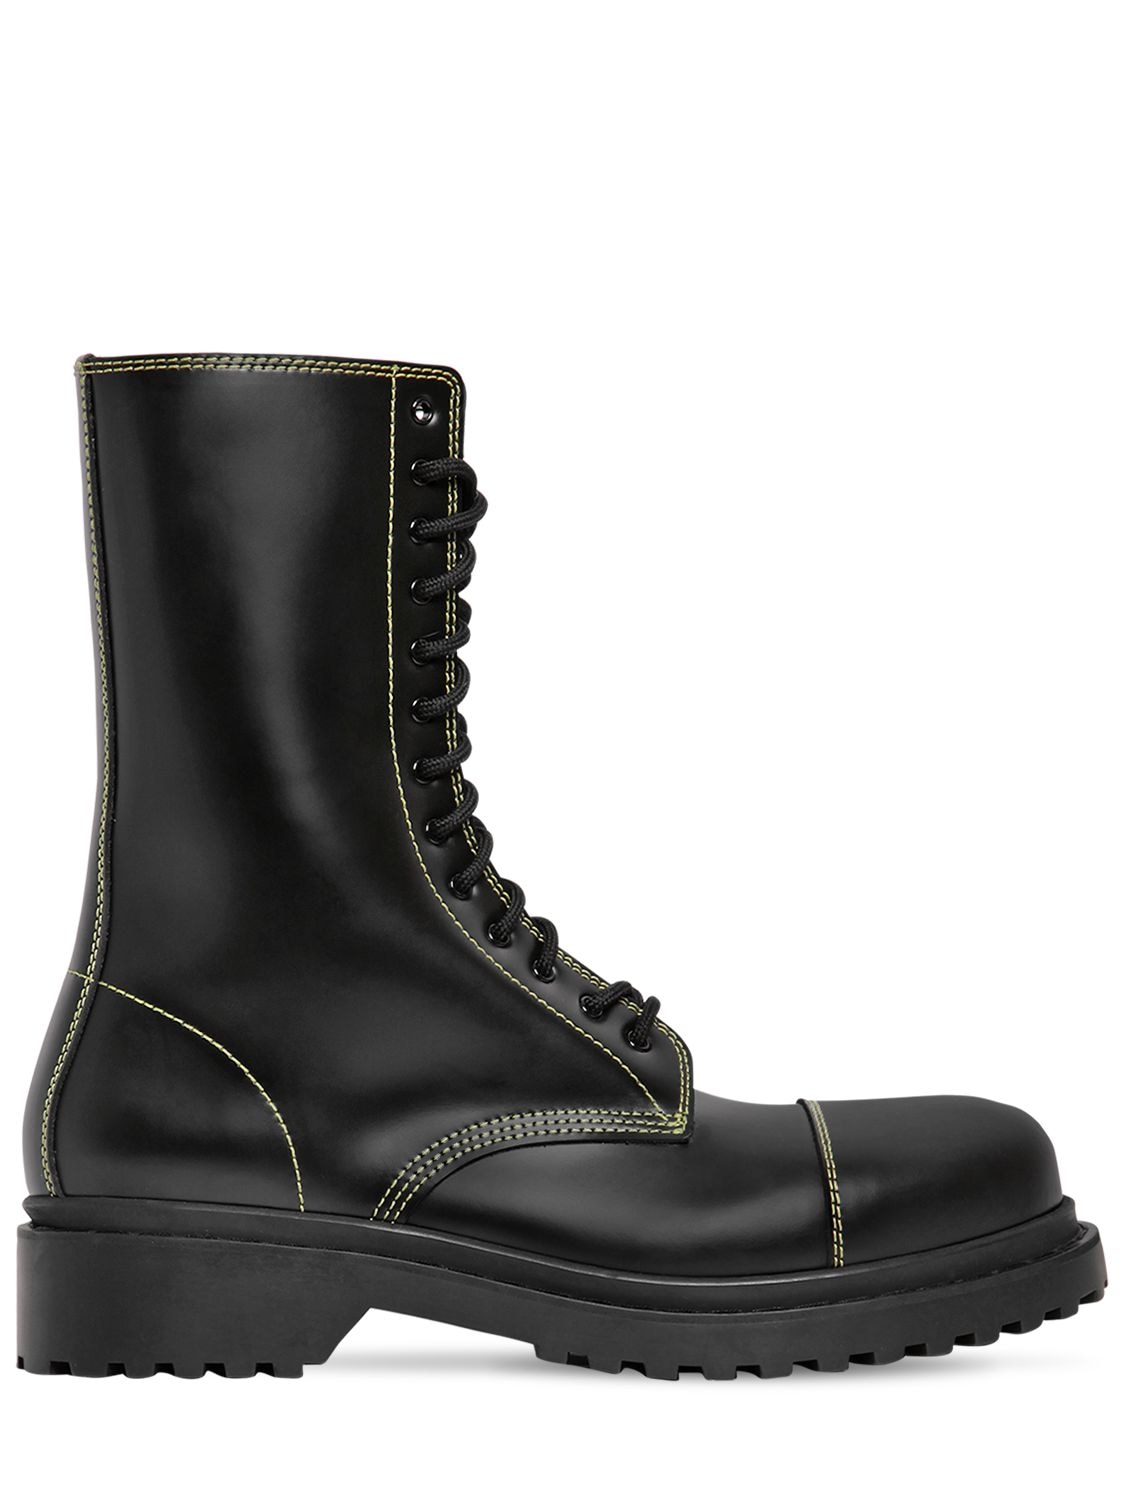 balenciaga boots leather